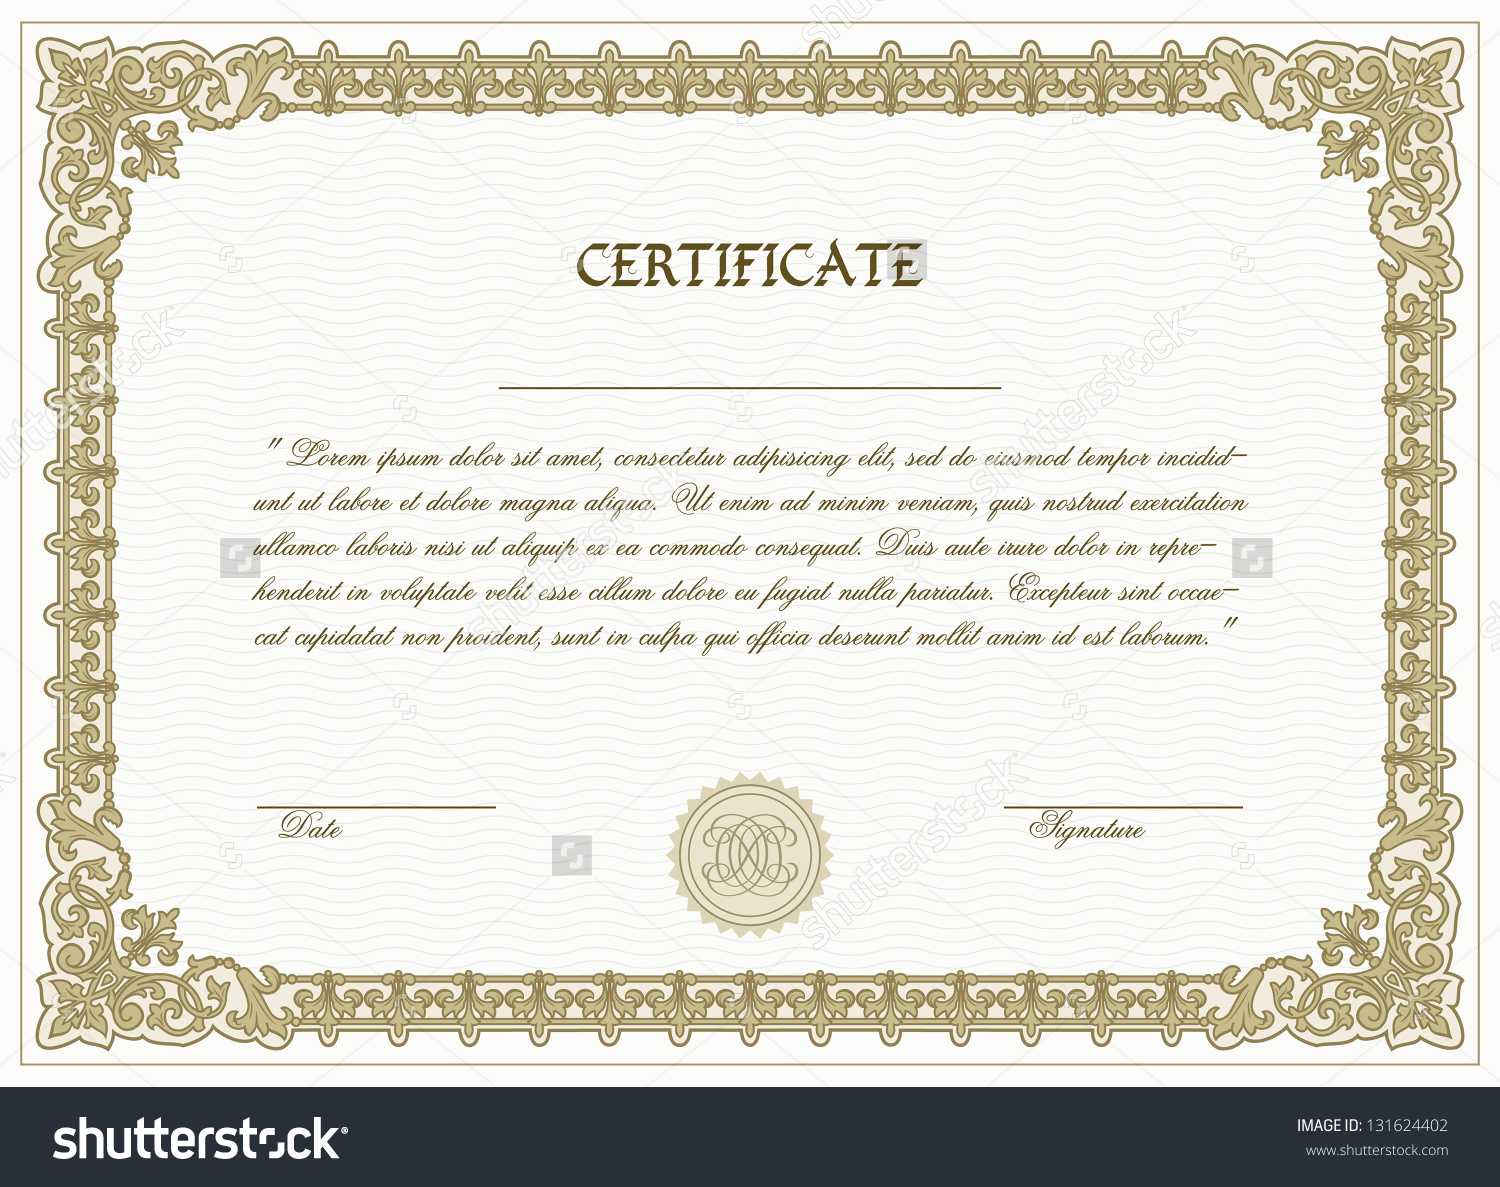 High Resolution Certificate Template - Atlantaauctionco Inside High Resolution Certificate Template